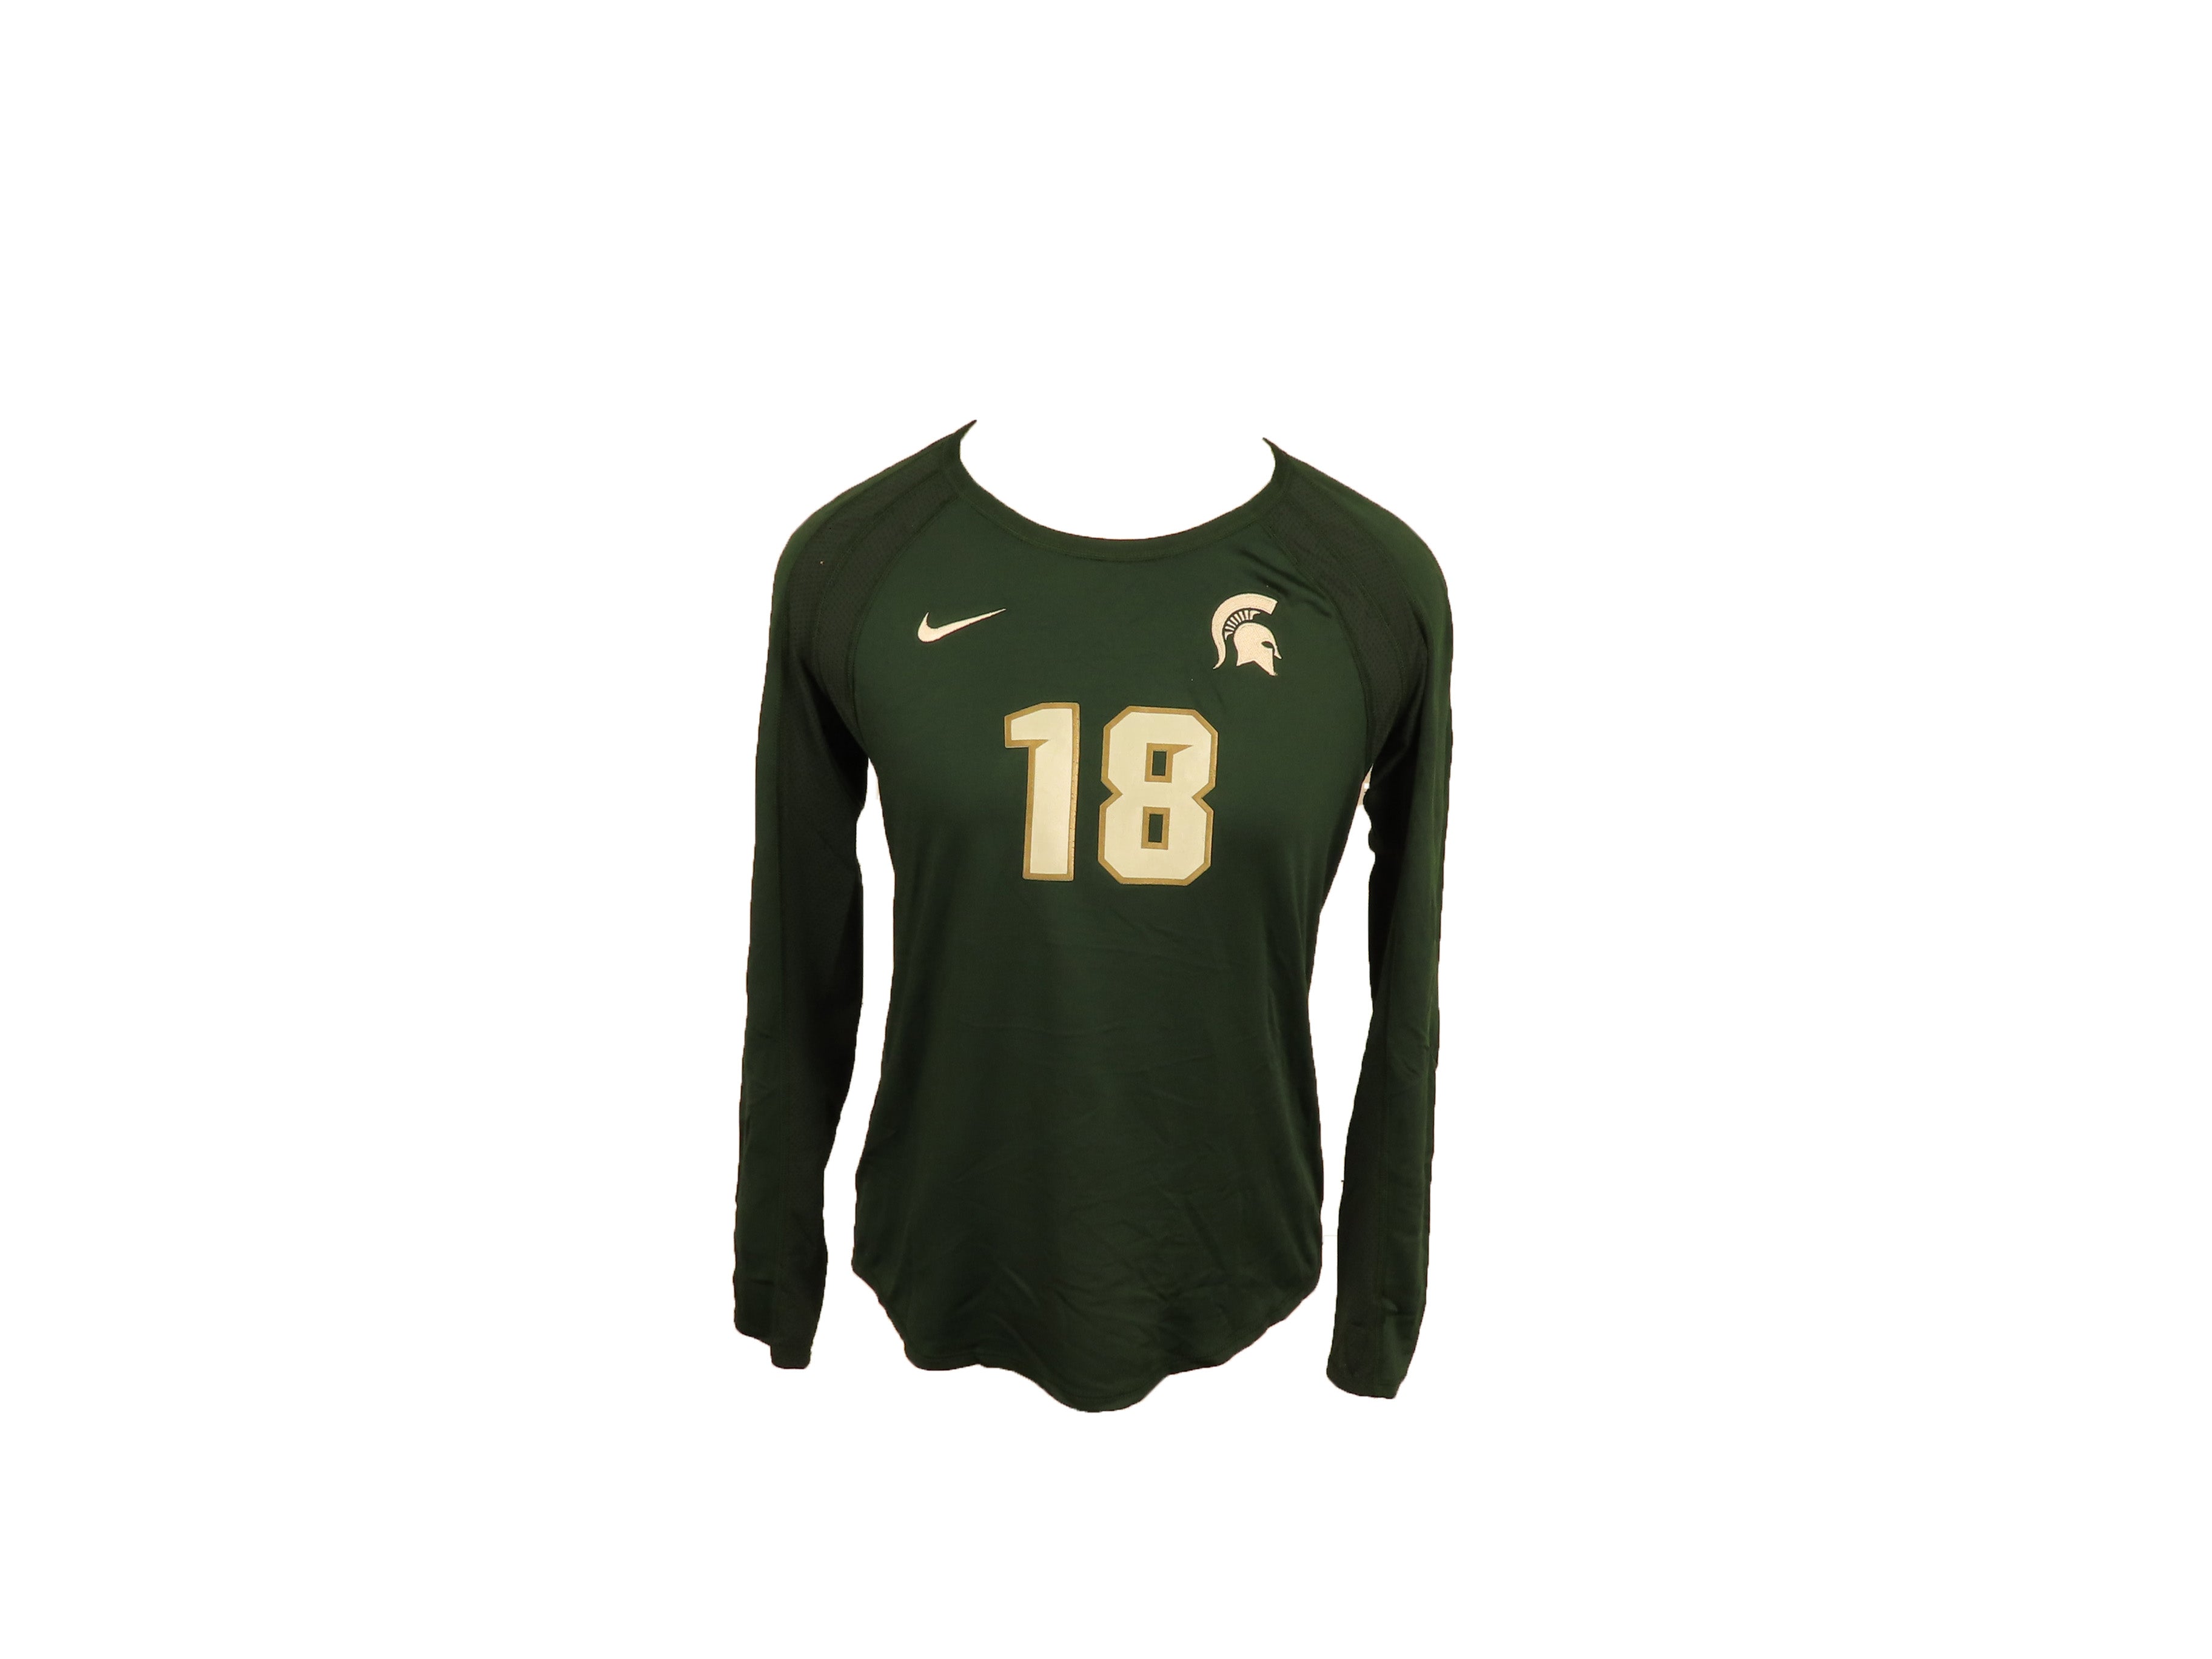 Nike Green Long Sleeve MSU Volleyball #18 Jersey Women's Size L